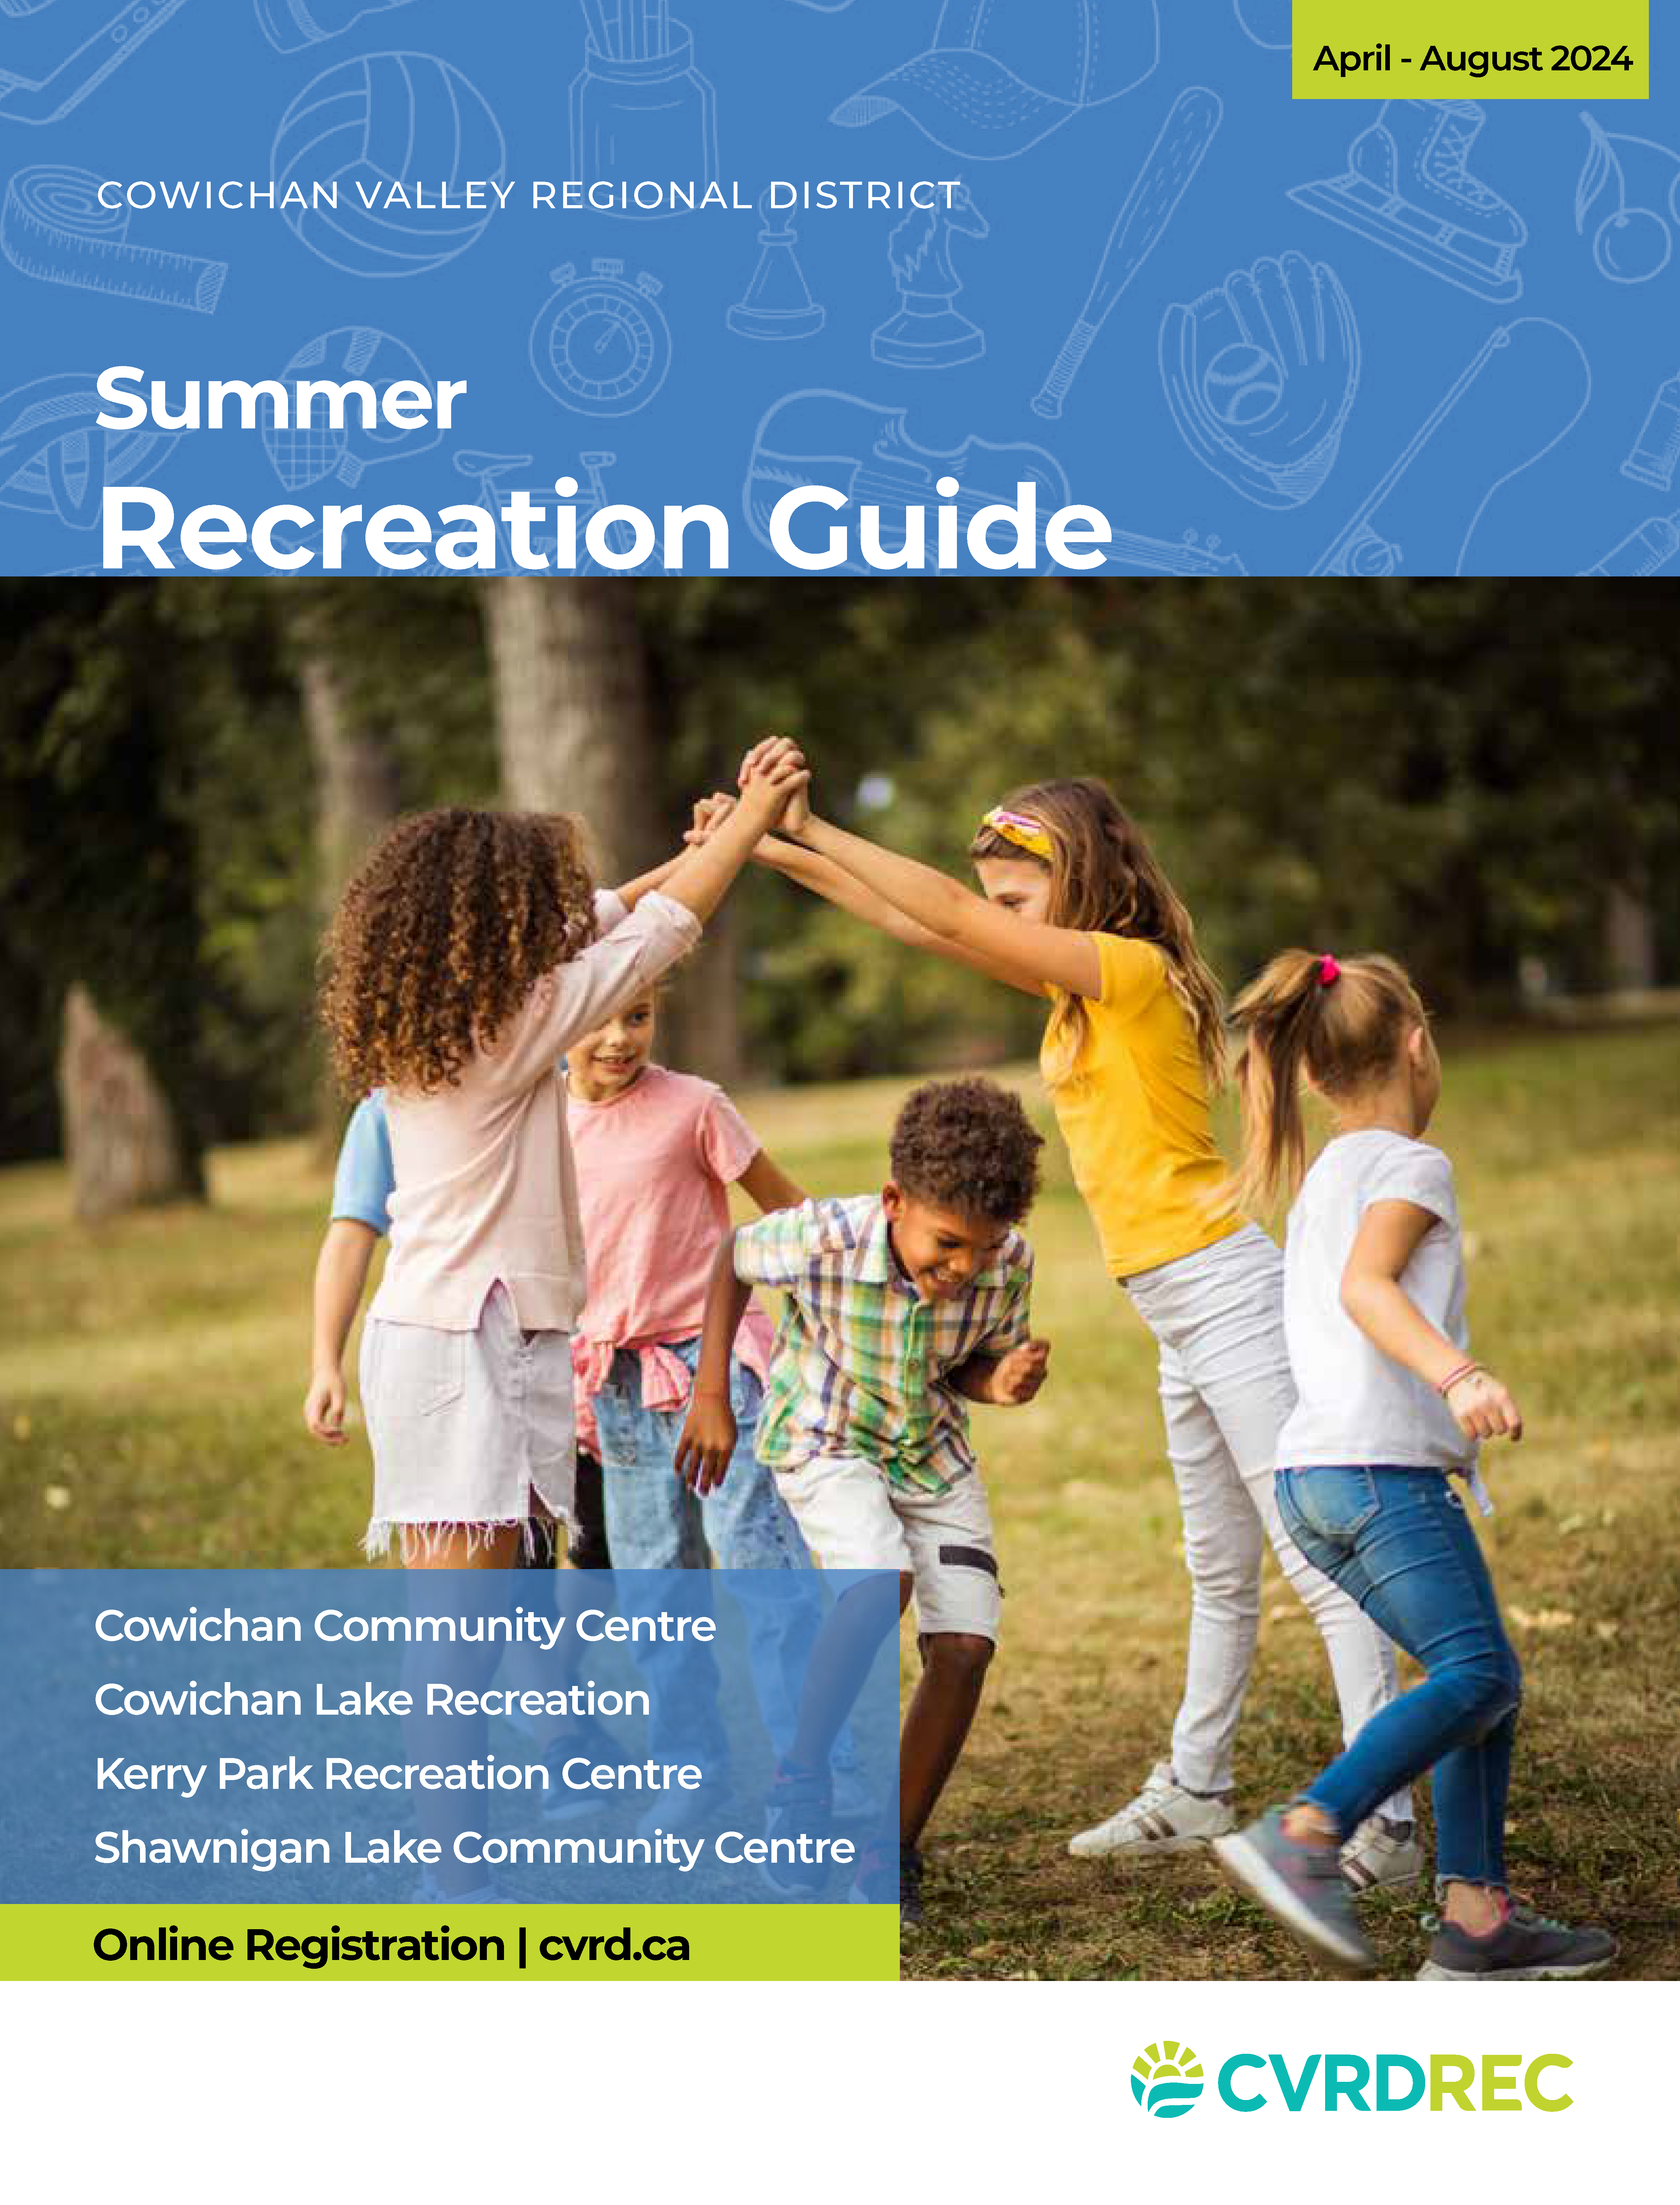 CVRD - Recreation Guide - Summer 2024